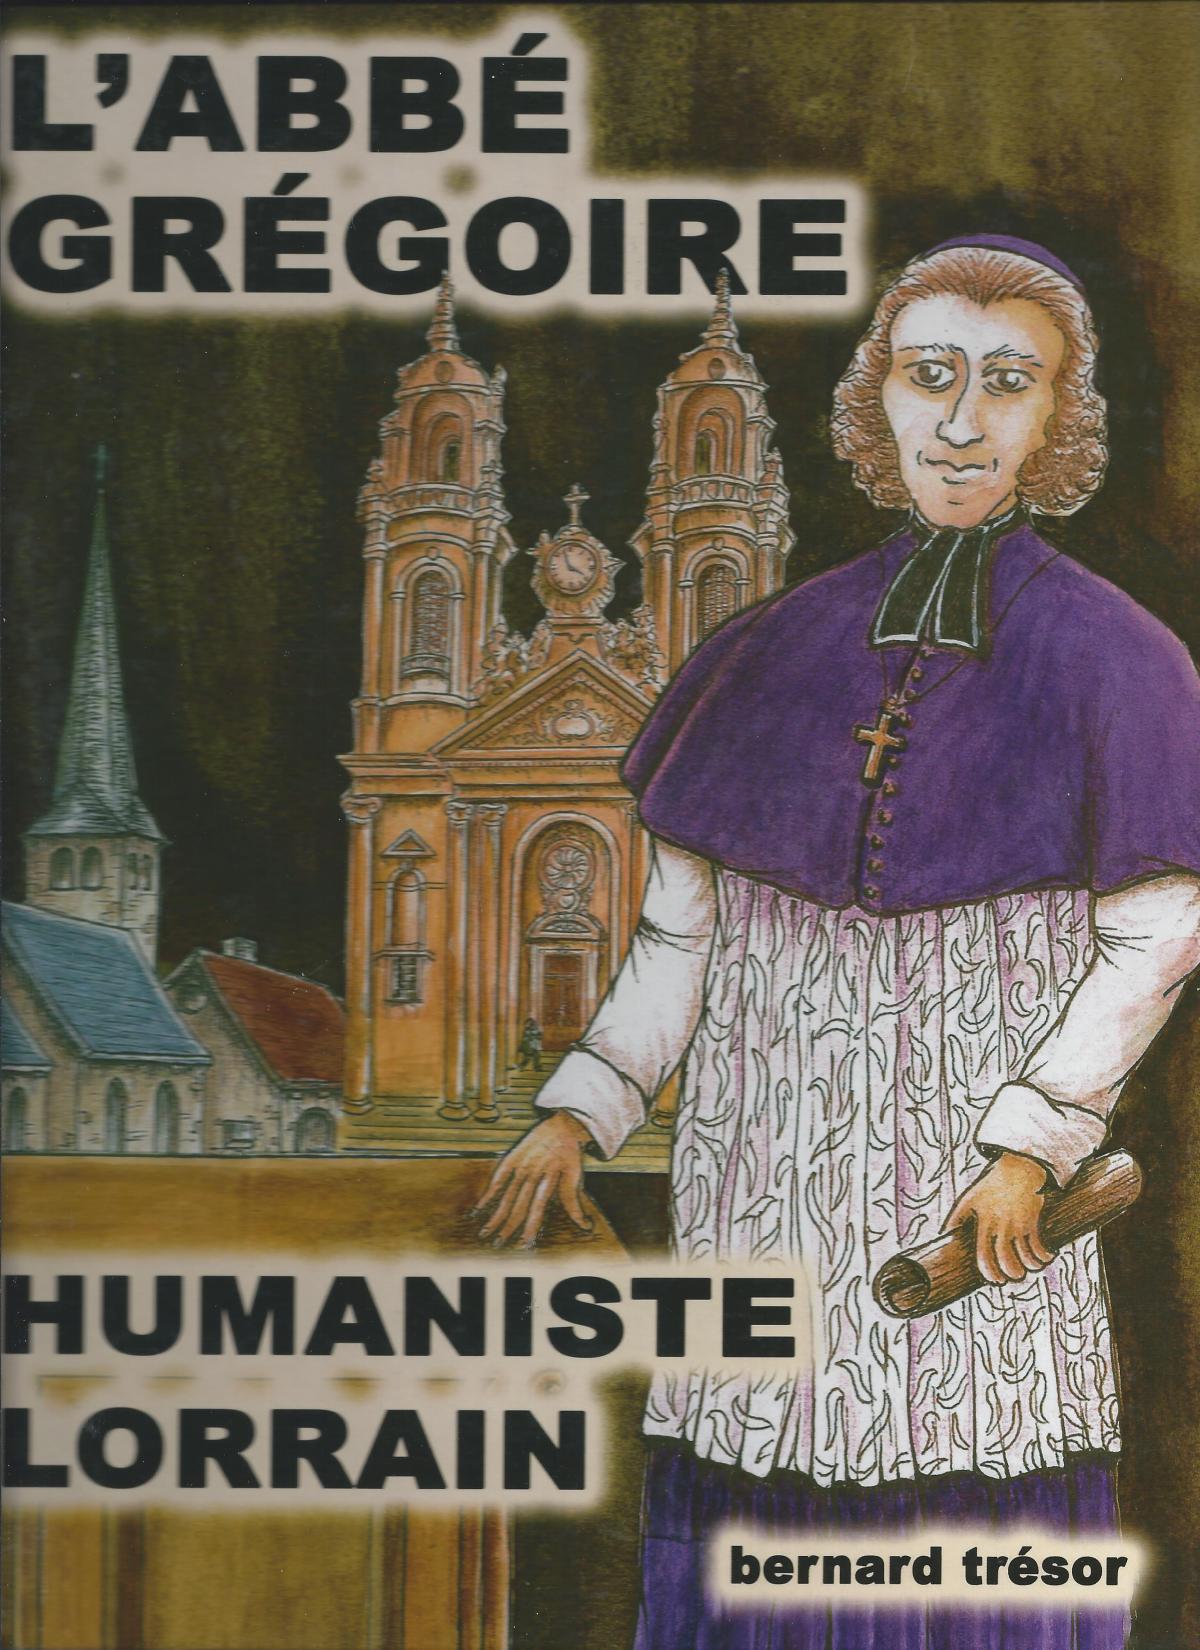 L'Abbé Grégoire, humaniste Lorrain